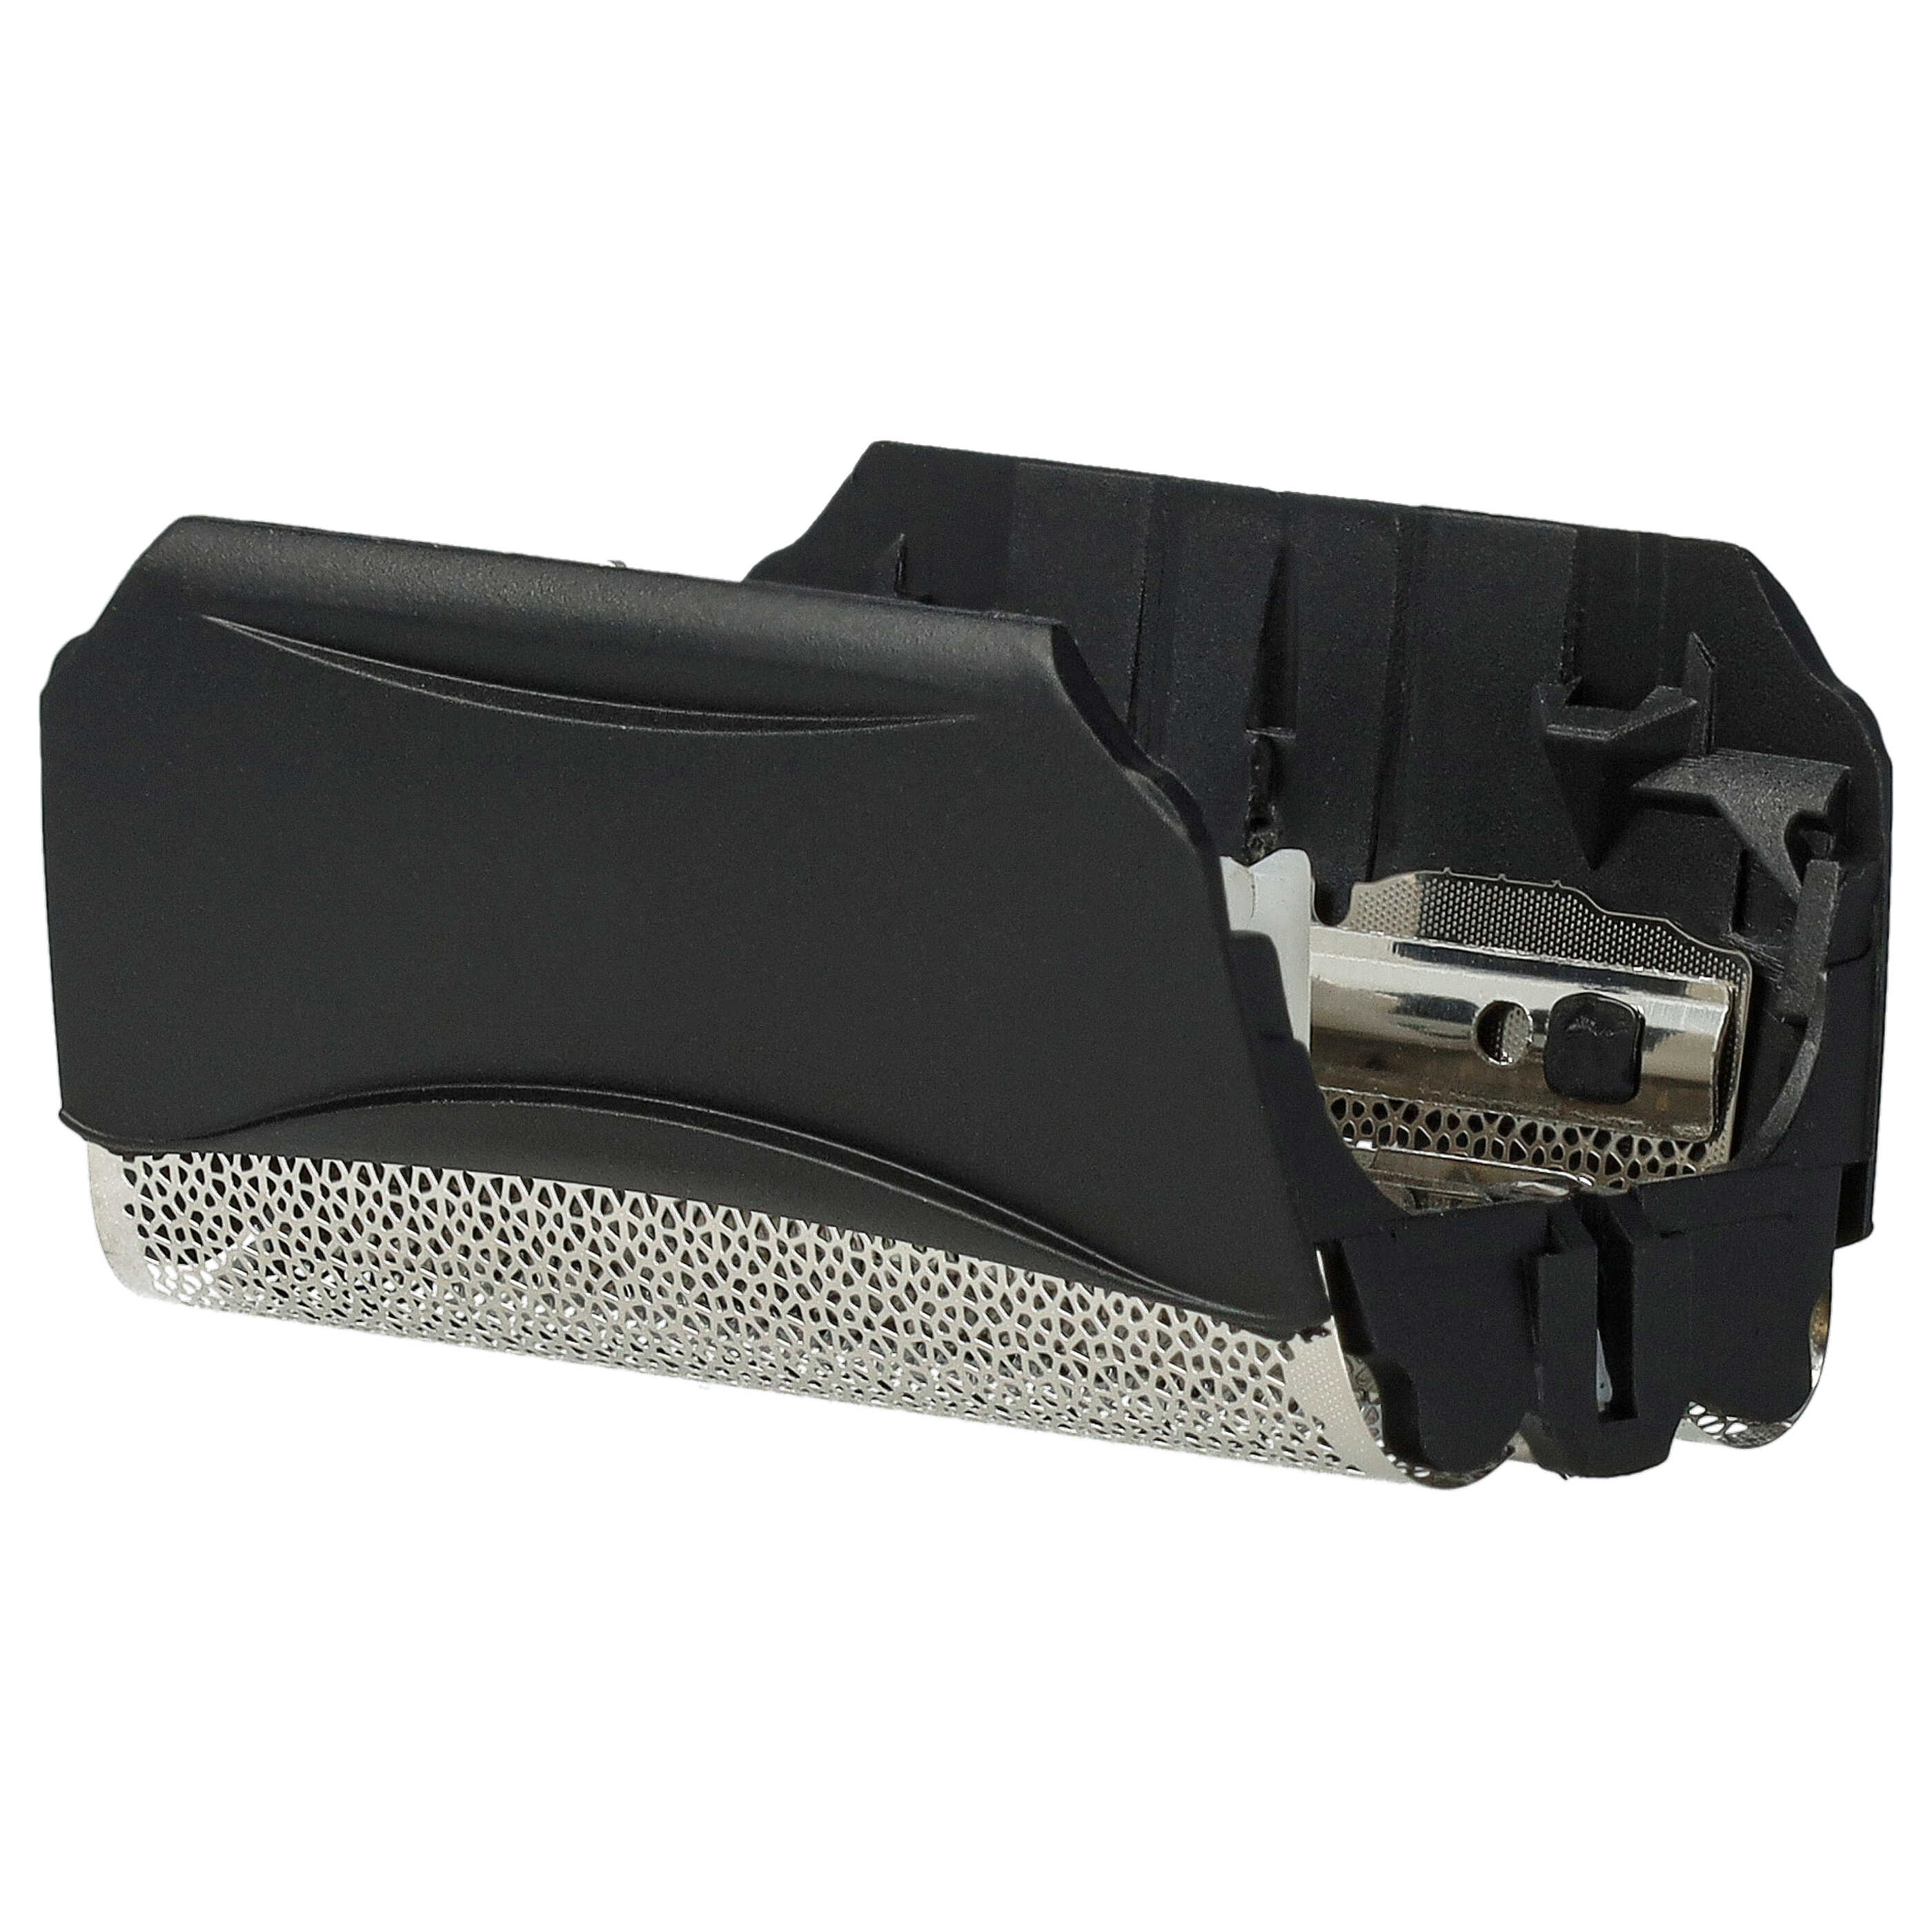 Pack piezas corte reemplaza Braun 51B, 51S para afeitadoras Braun - lámina + bloque, negro/plata